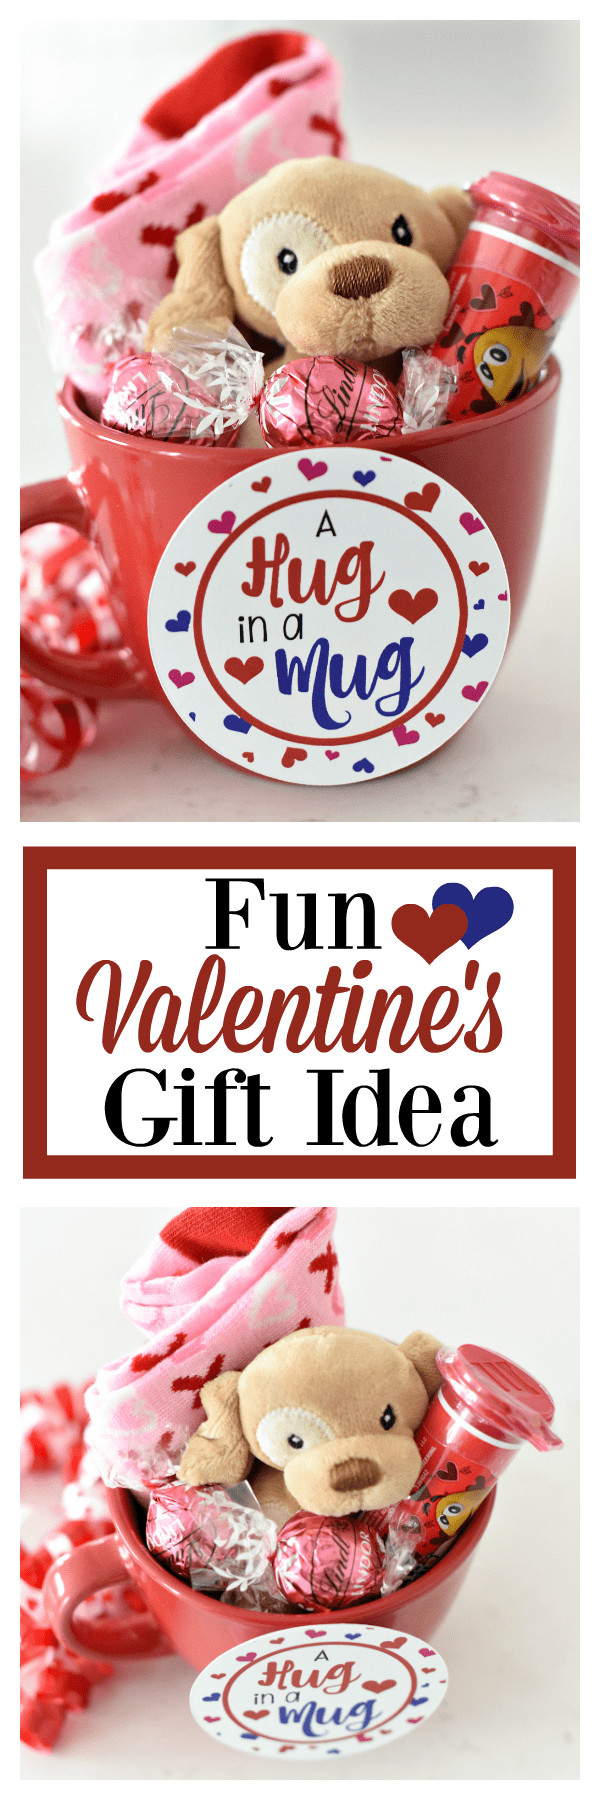 Child Valentine Gift Ideas
 Fun Valentines Gift Idea for Kids – Fun Squared